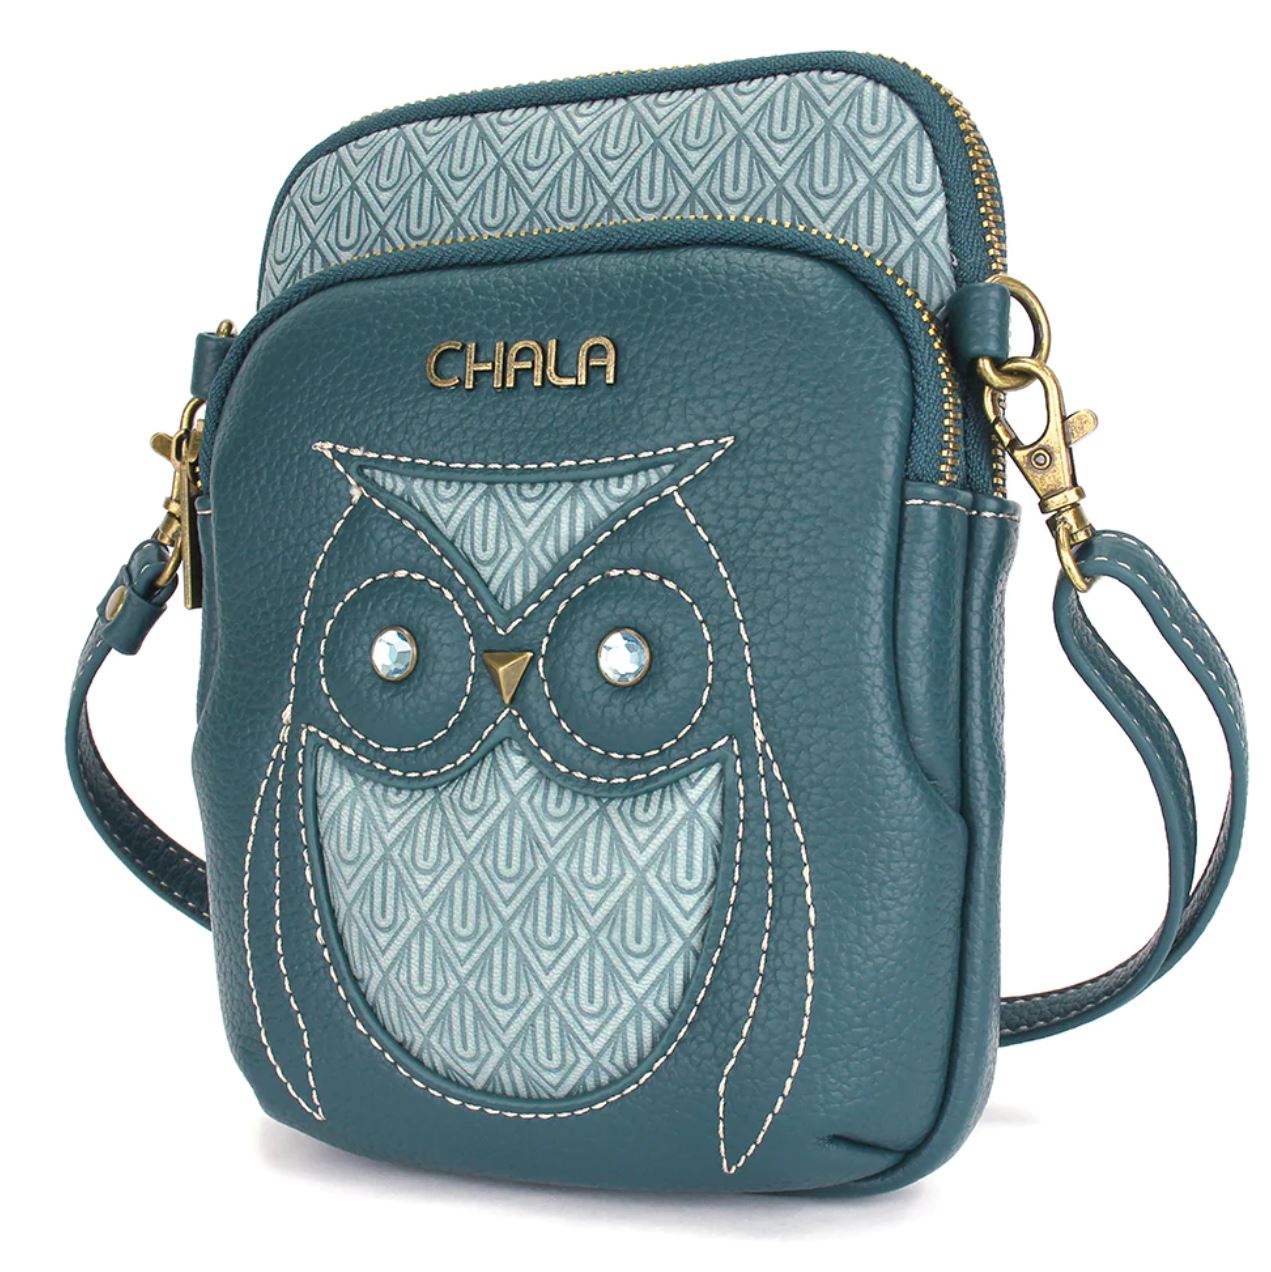 Chala Xbody Bag - Owl